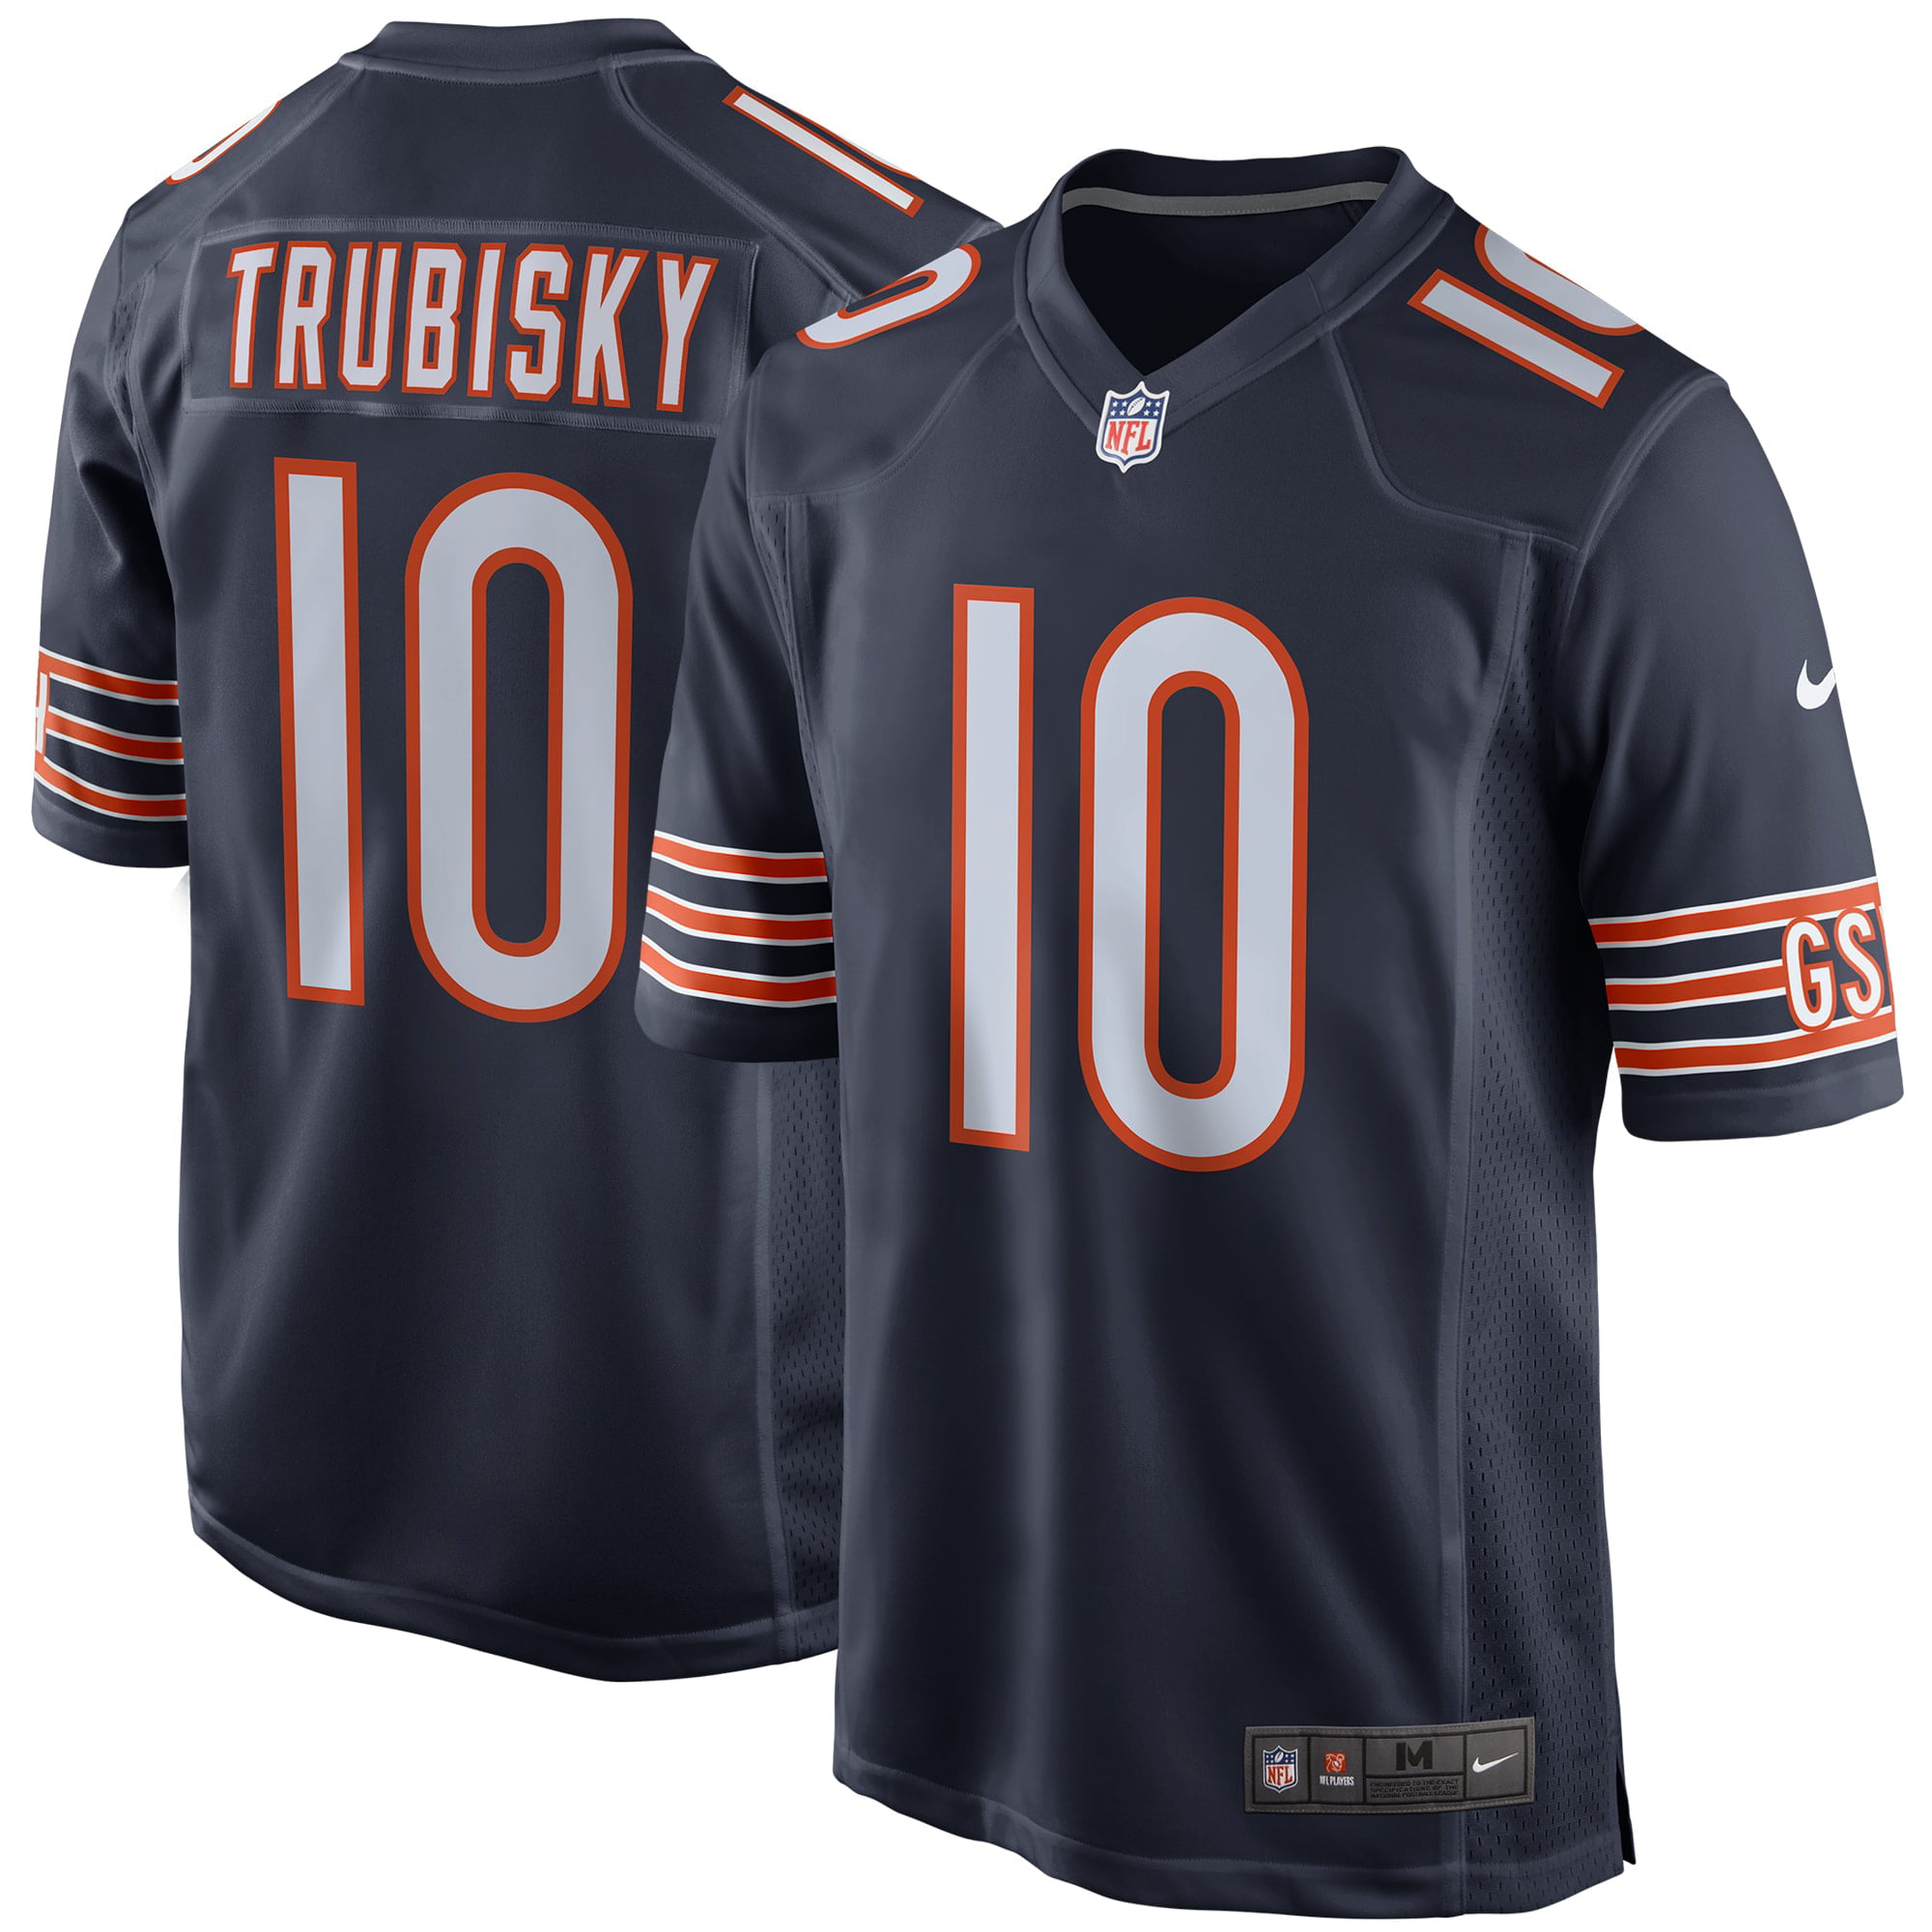 chicago bears jersey trubisky